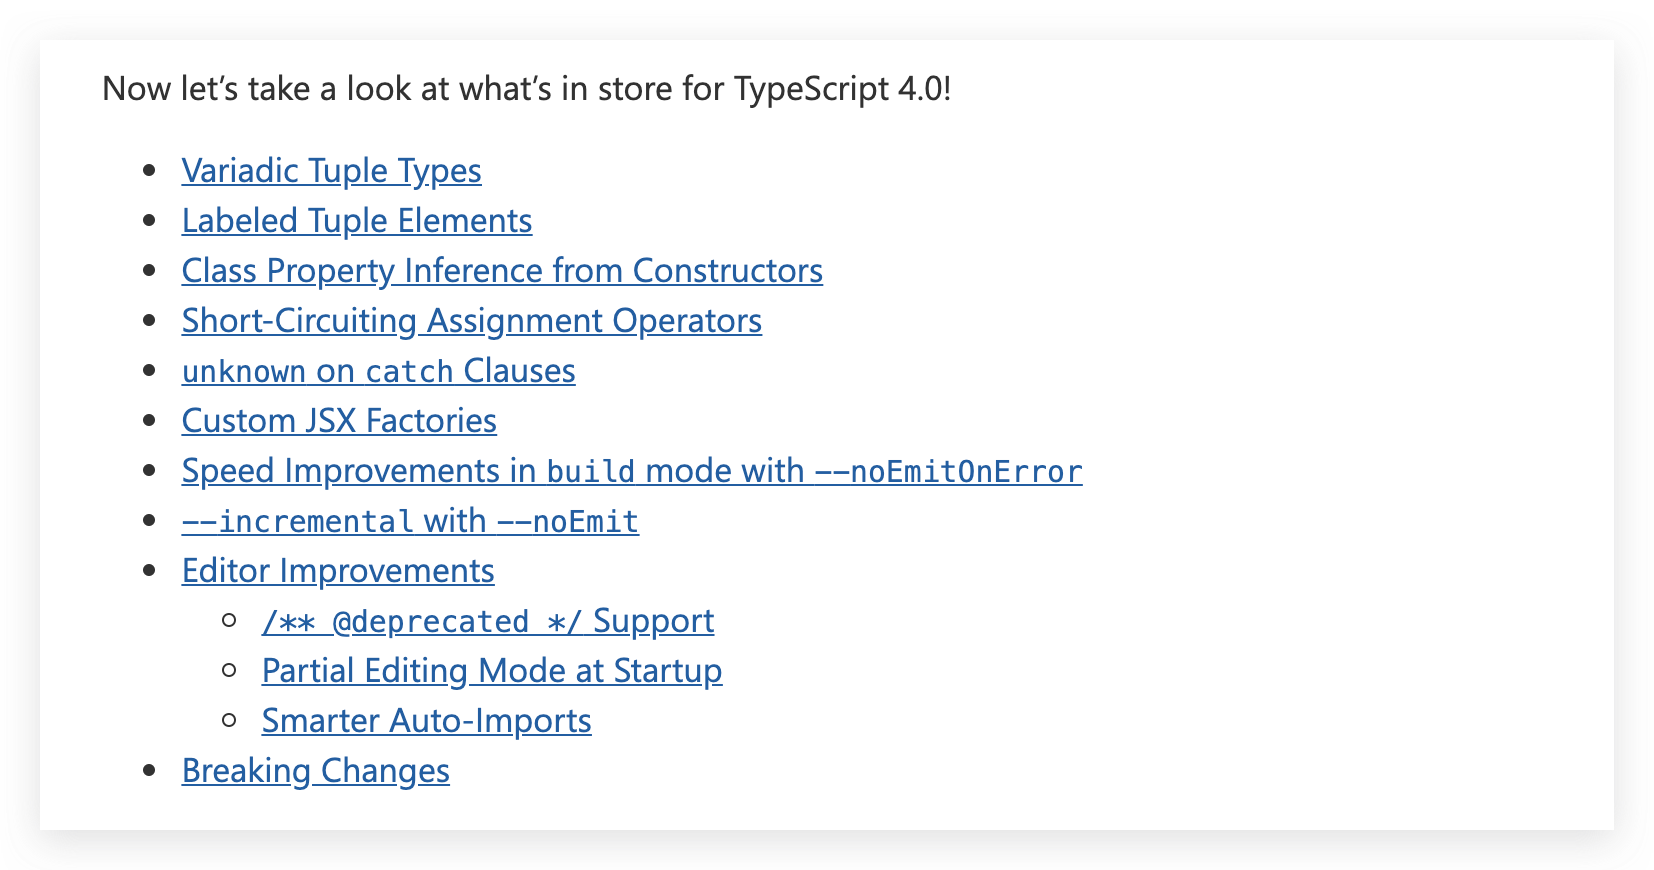 Announcing TypeScript 4.0 - TypeScript